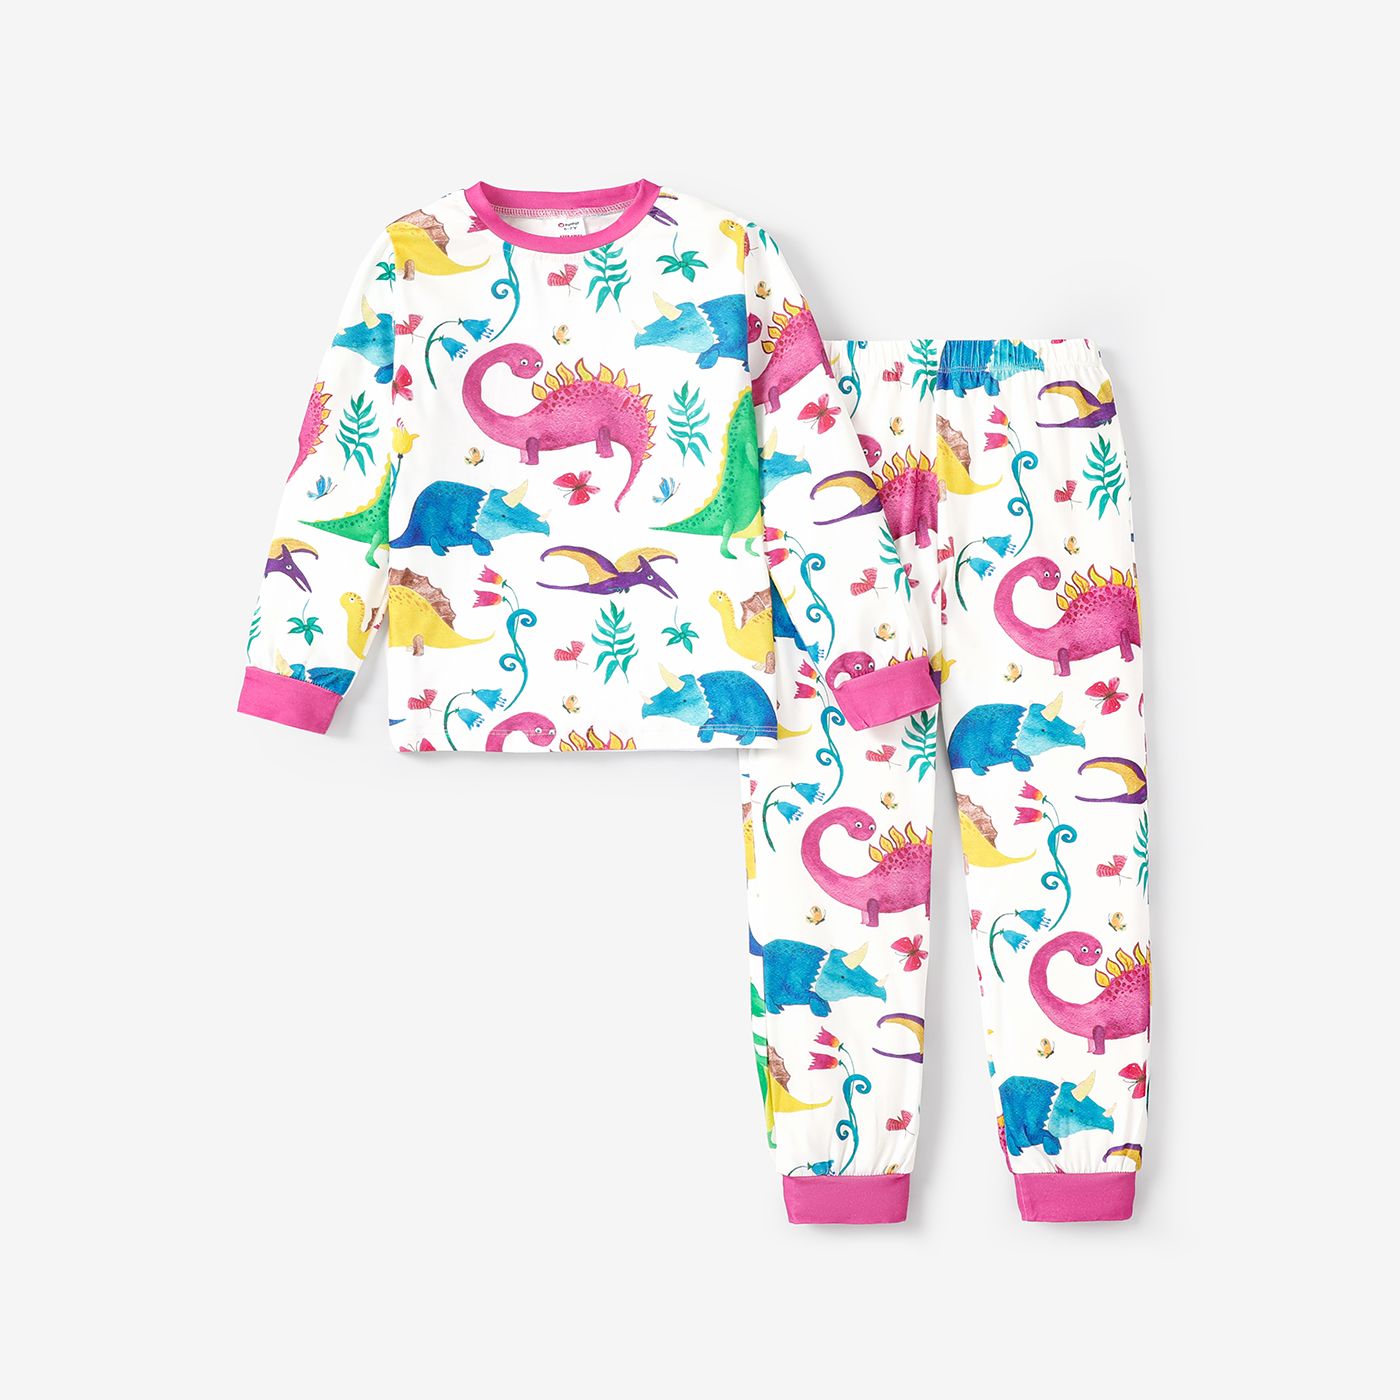 Toddler / Kid Girl Childlike Animal Pattern Home Clothes Set